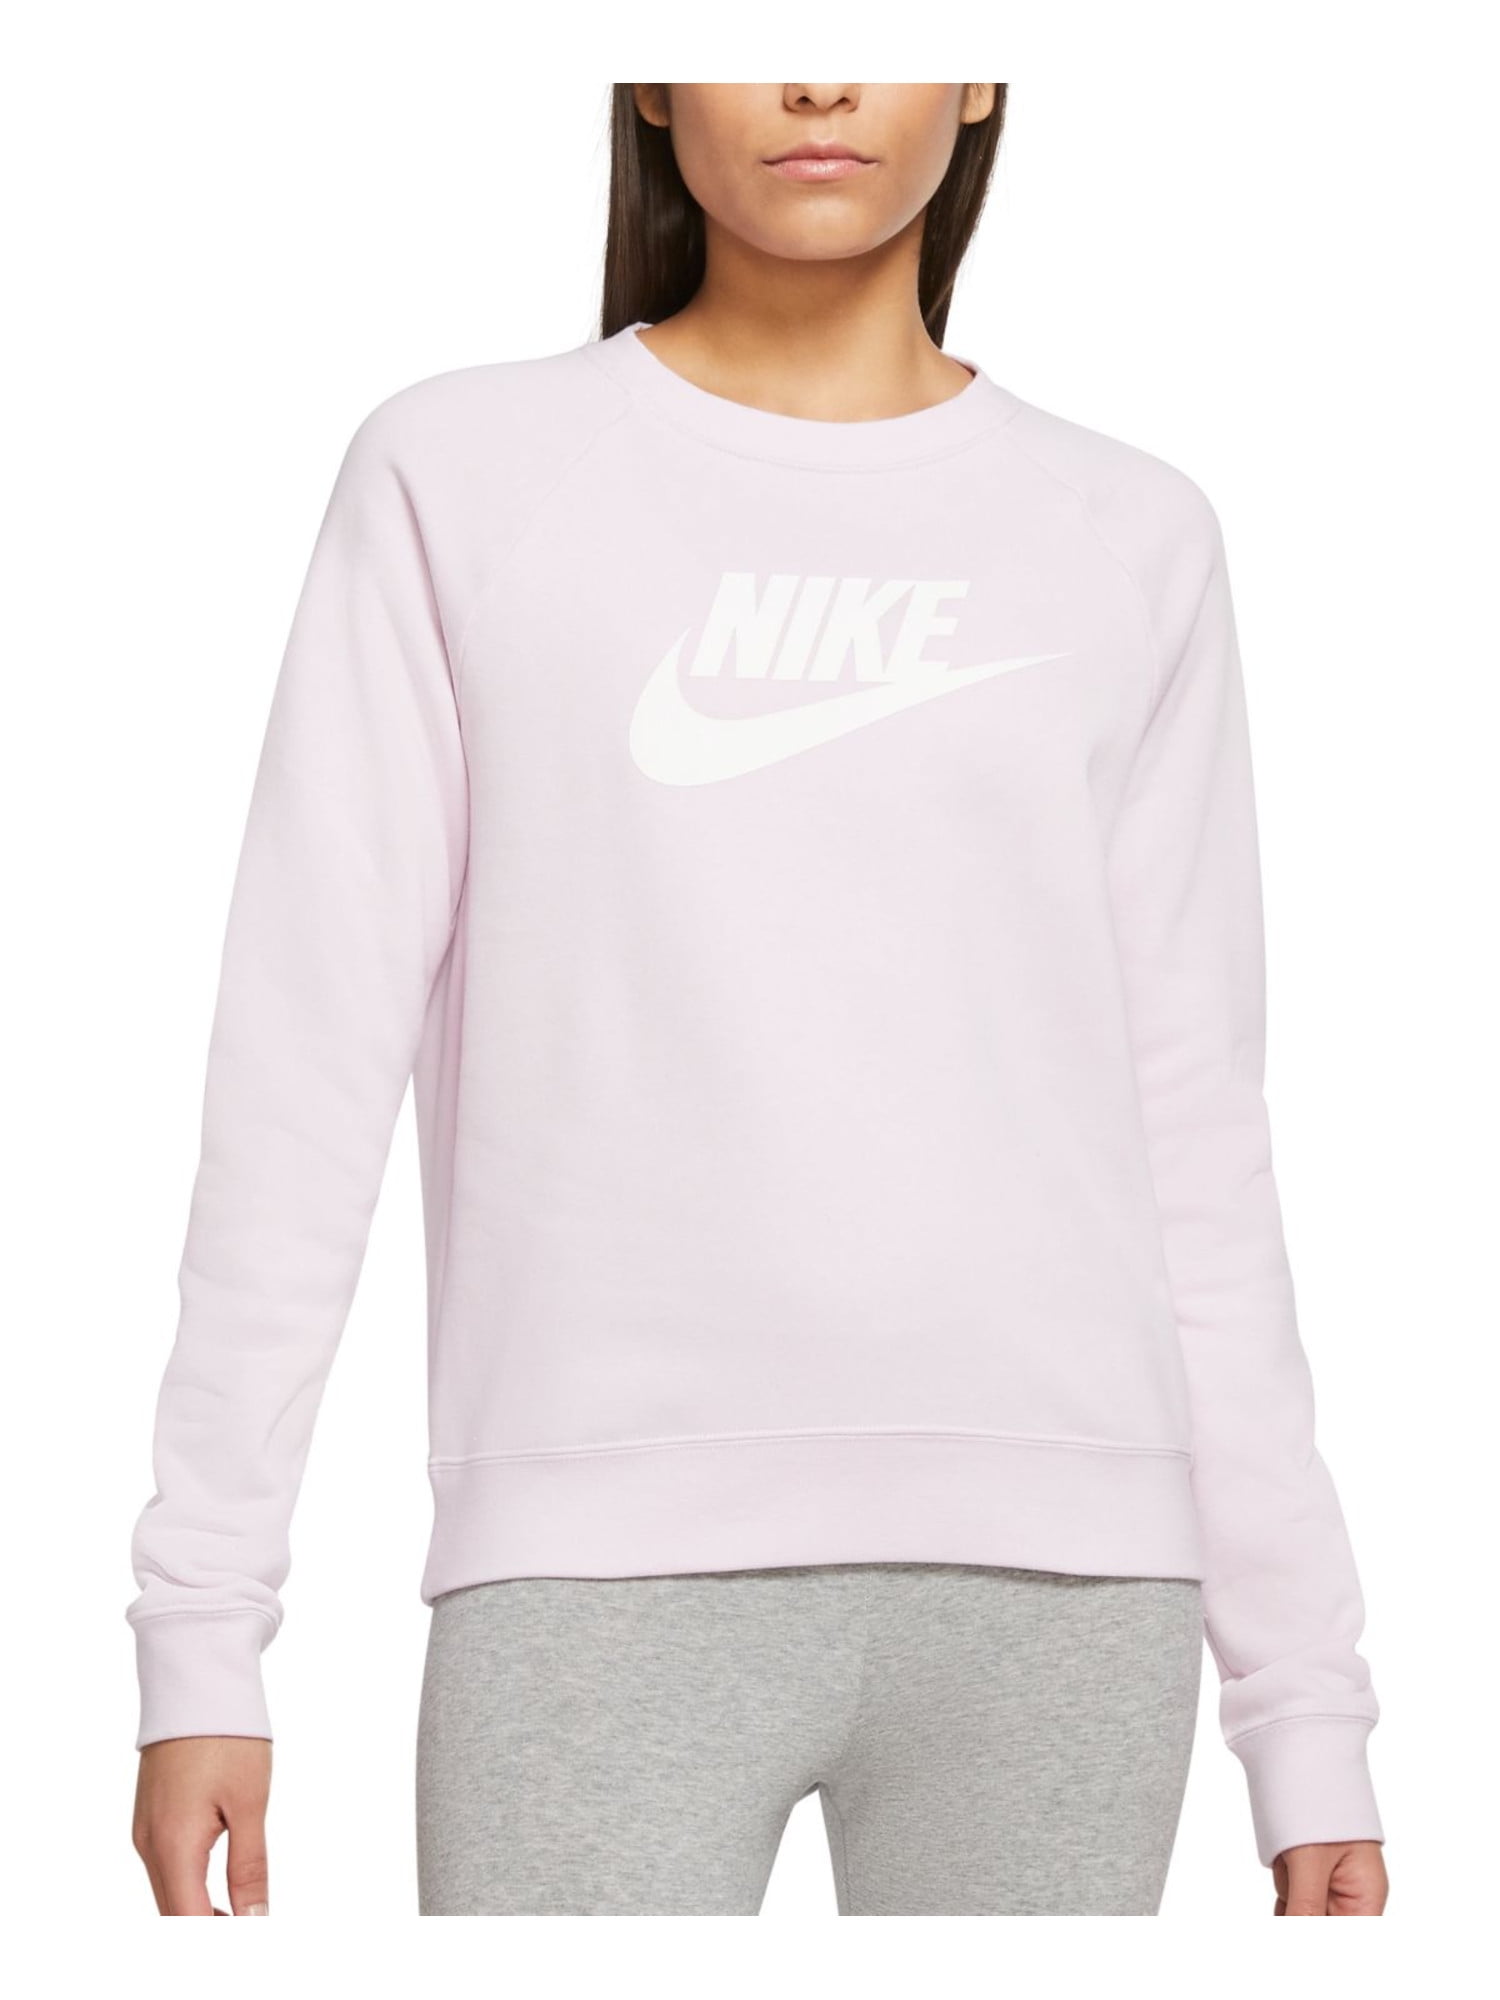 NIKE Womens Pink Logo Graphic Long Sleeve Crew Neck Sweater Plus 3X